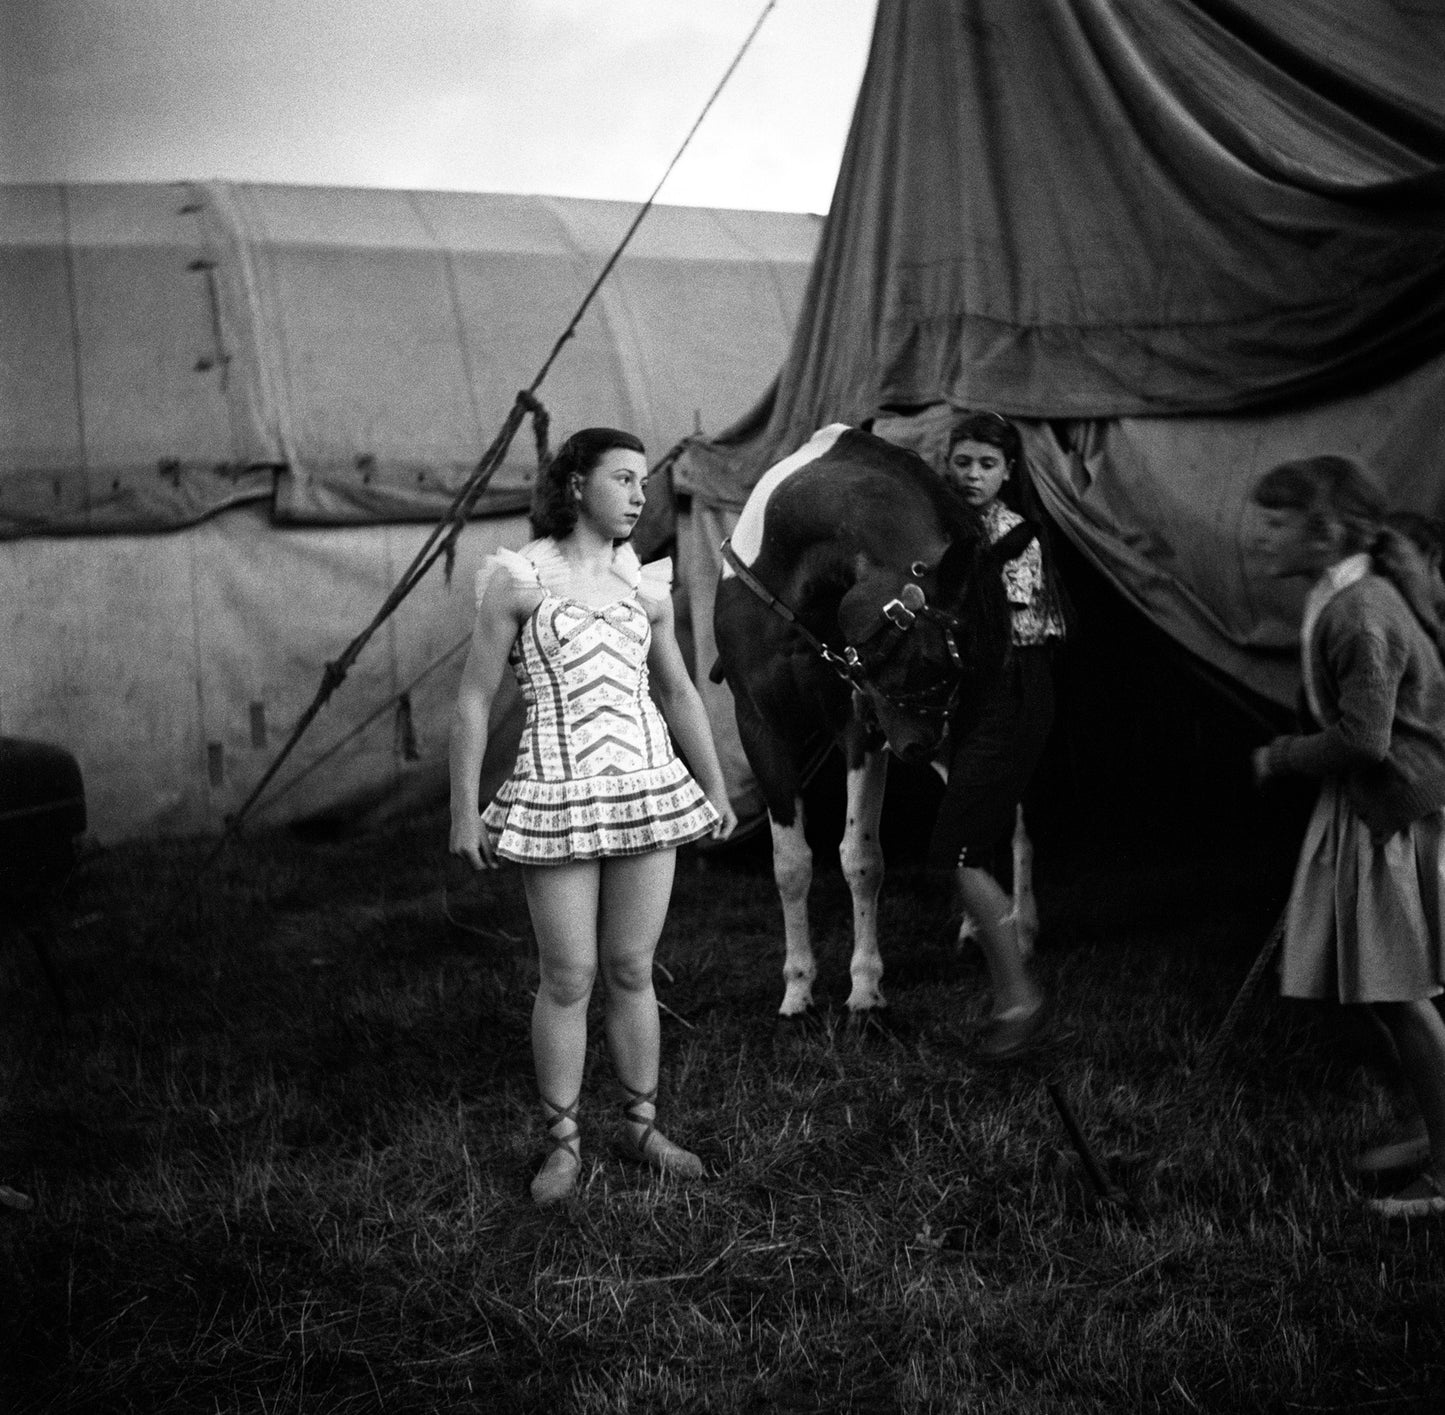 Circus van Bever, Lucebert